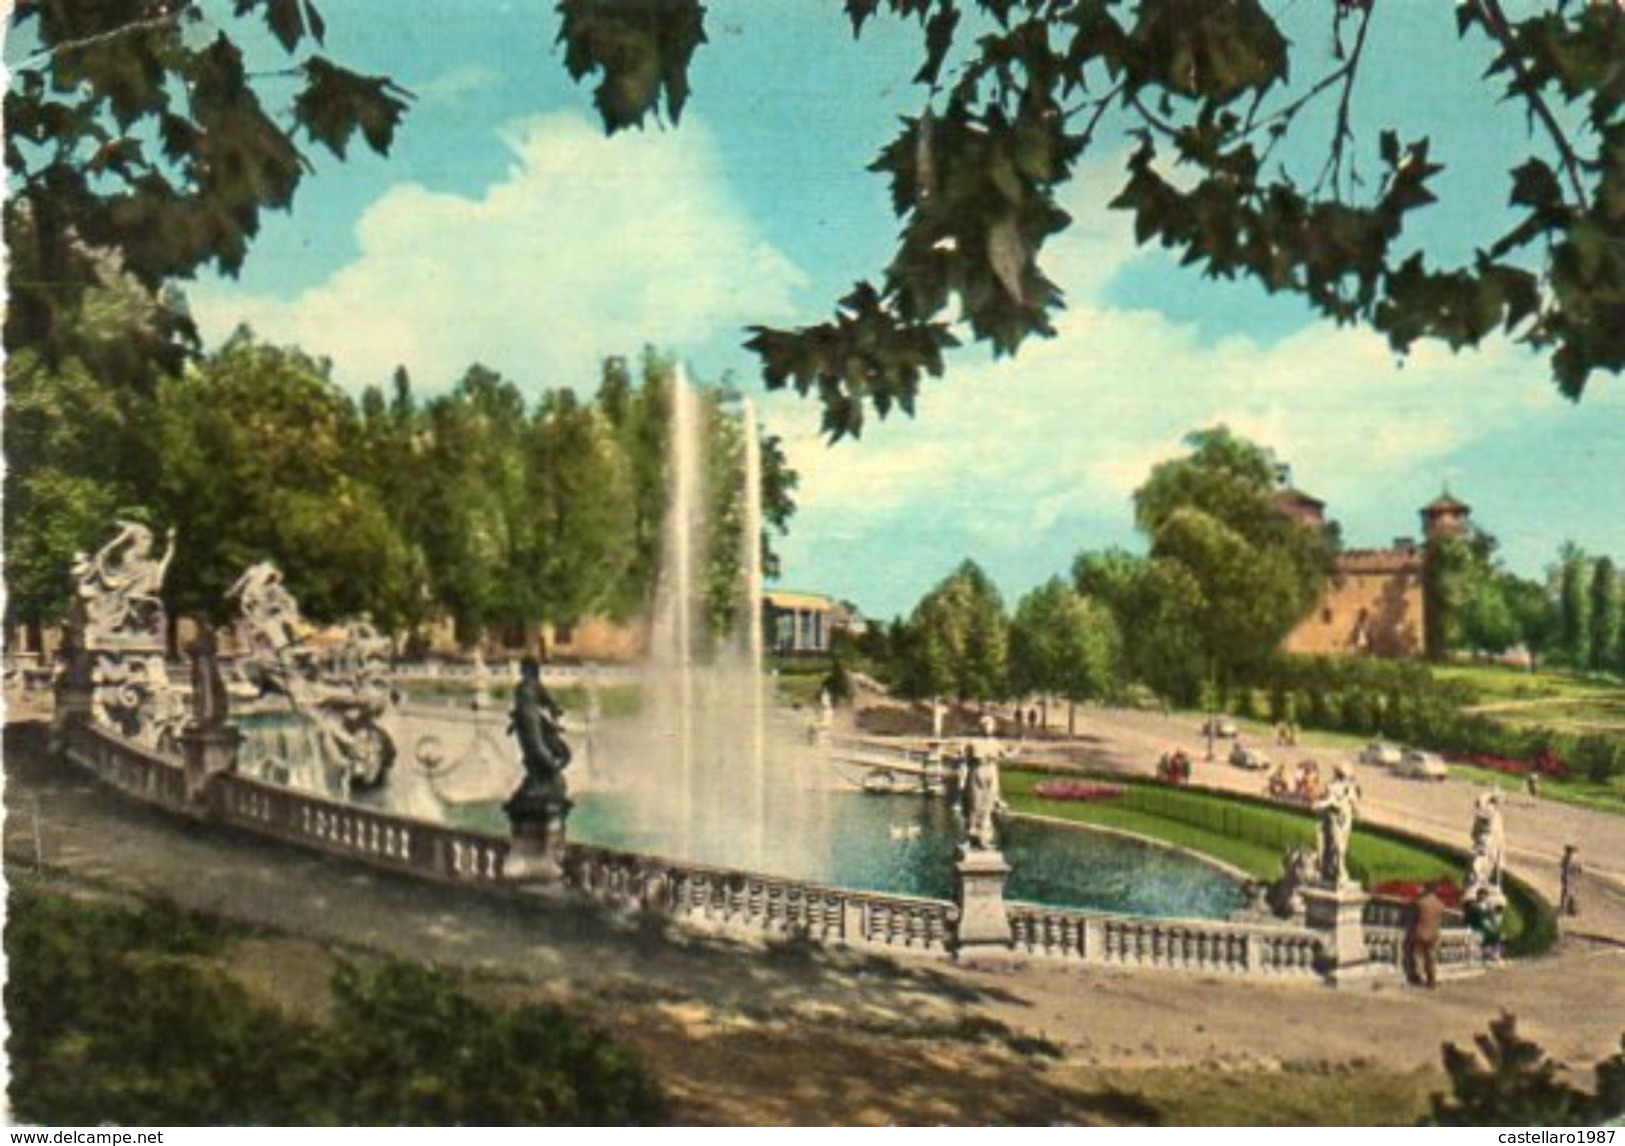 TORINO - Parco Del Valentino - Fontana Monumentale - Parcs & Jardins